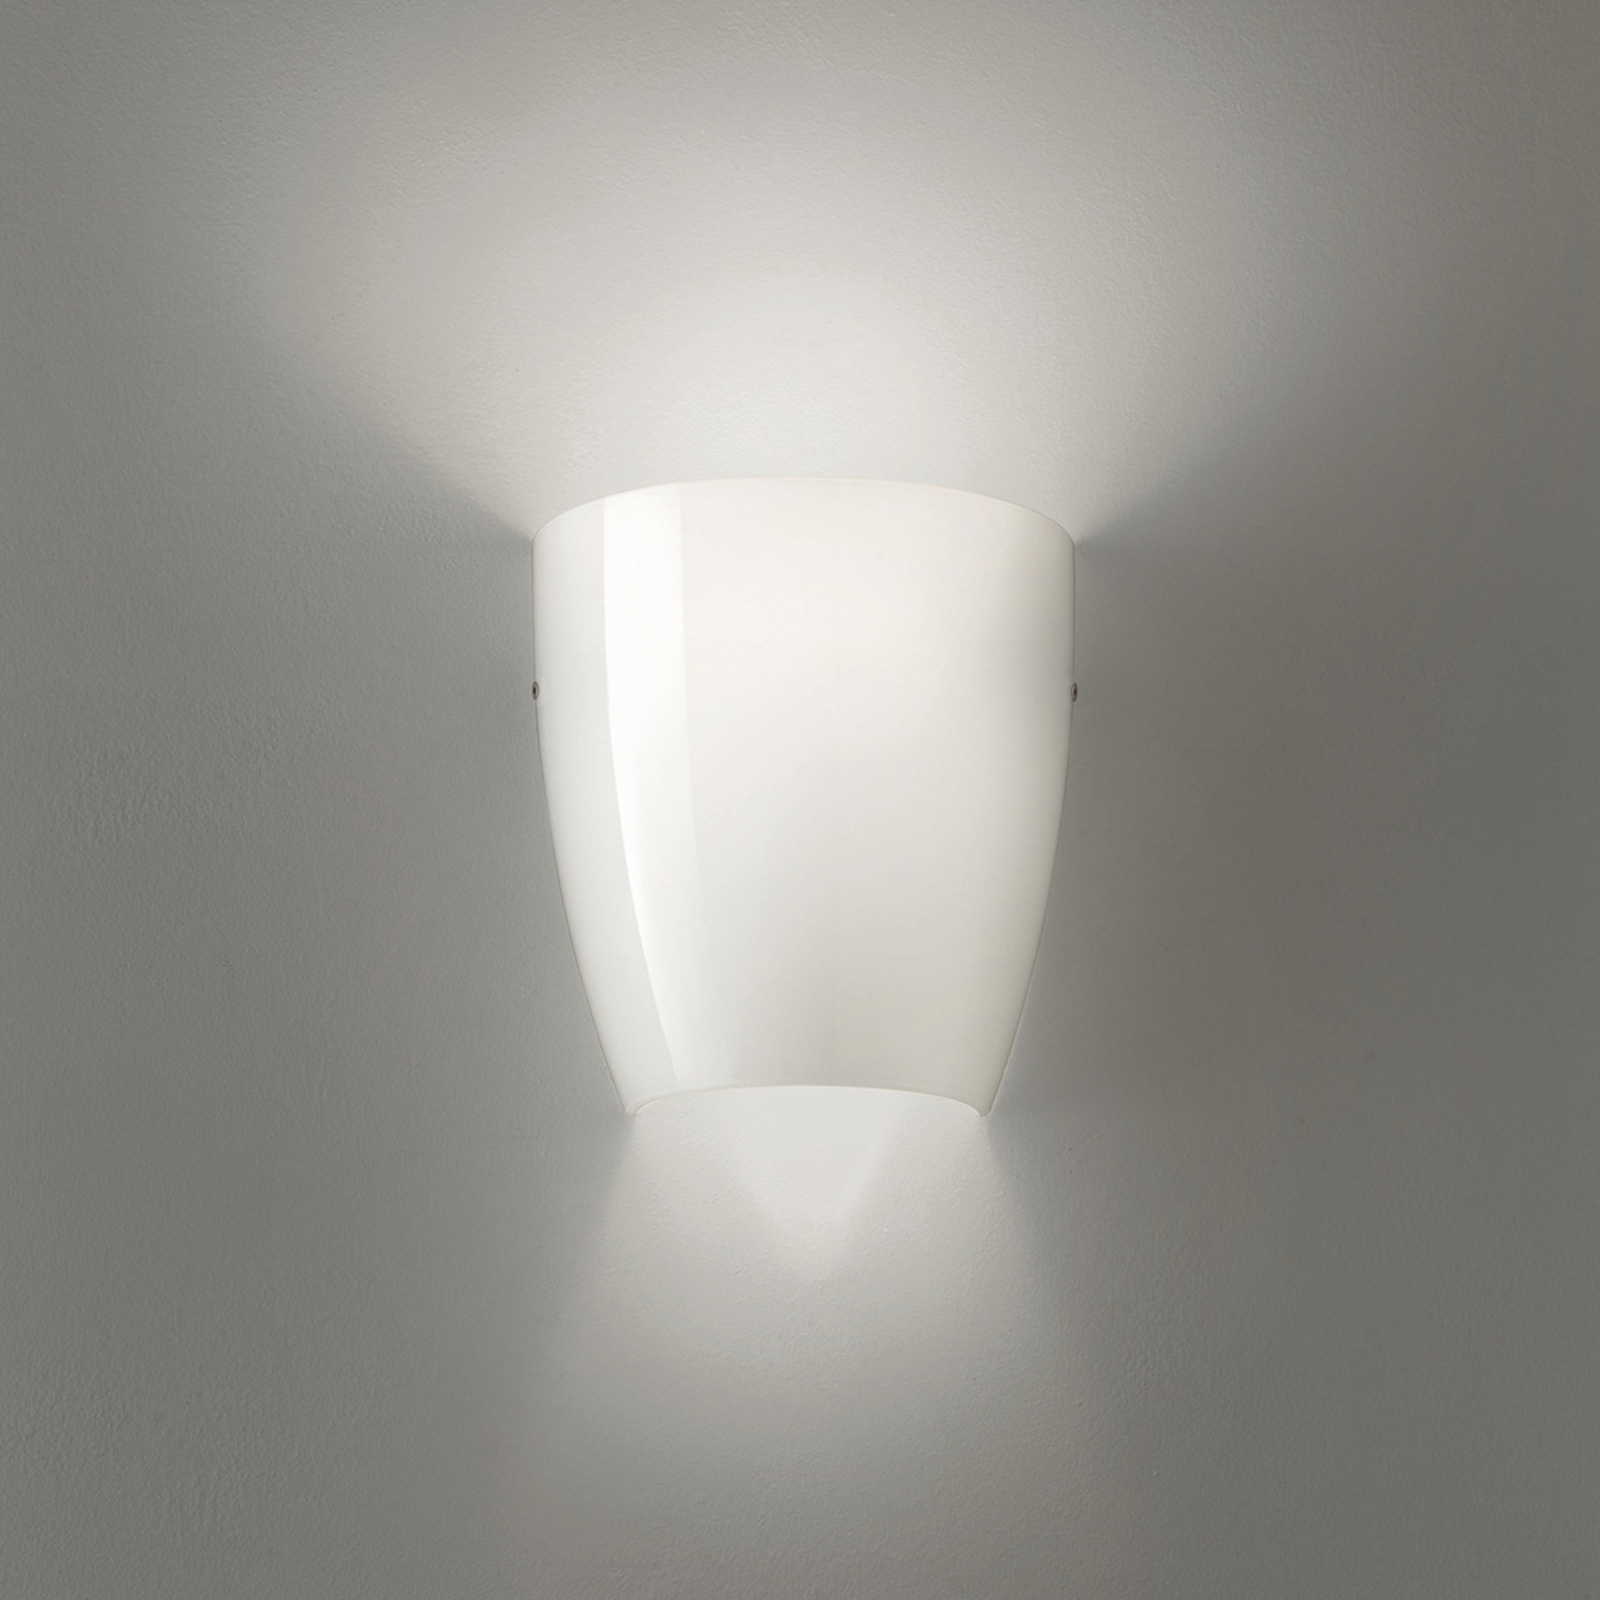 Dafne wall light made of glass, glossy white